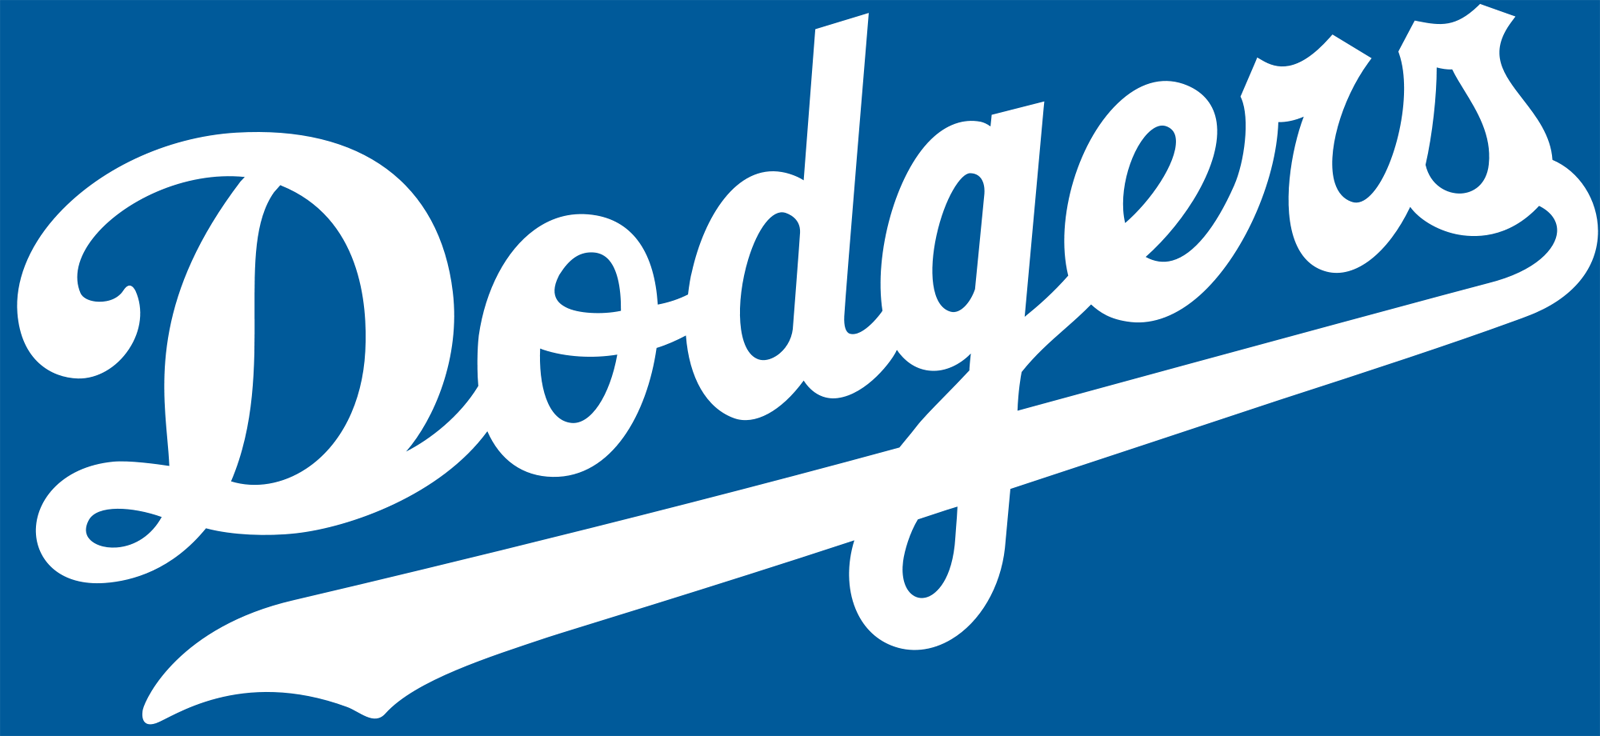 Los Angeles Dodgers Logo PNG - 179275